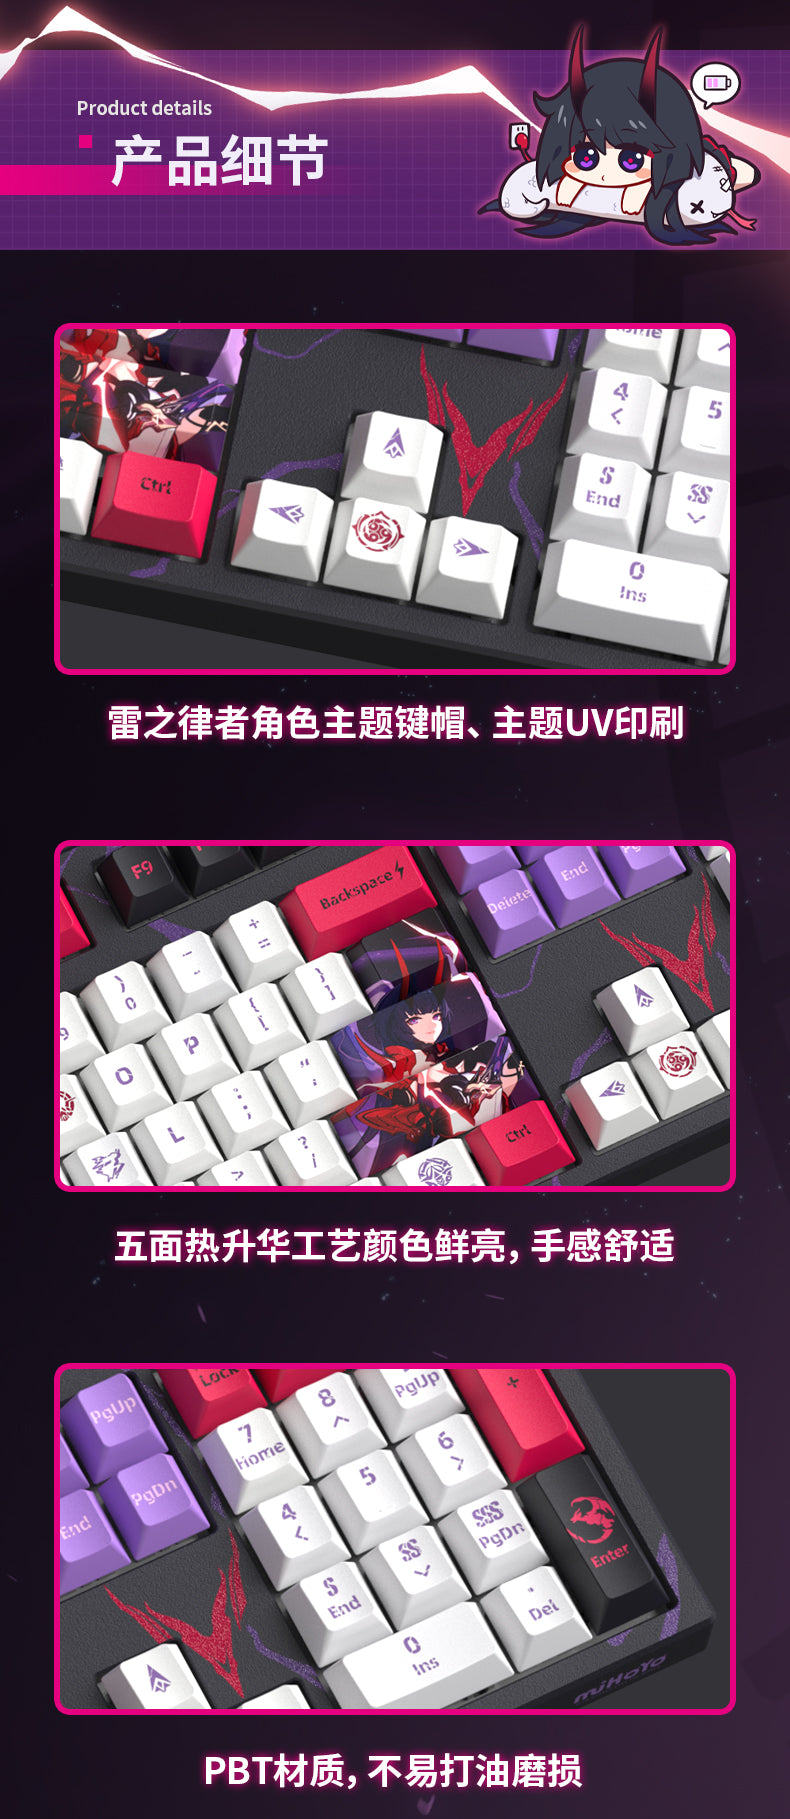 (Pre-Order) Honkai Impact 3rd - Herrscher of Thunder - Mechanical Keyboard